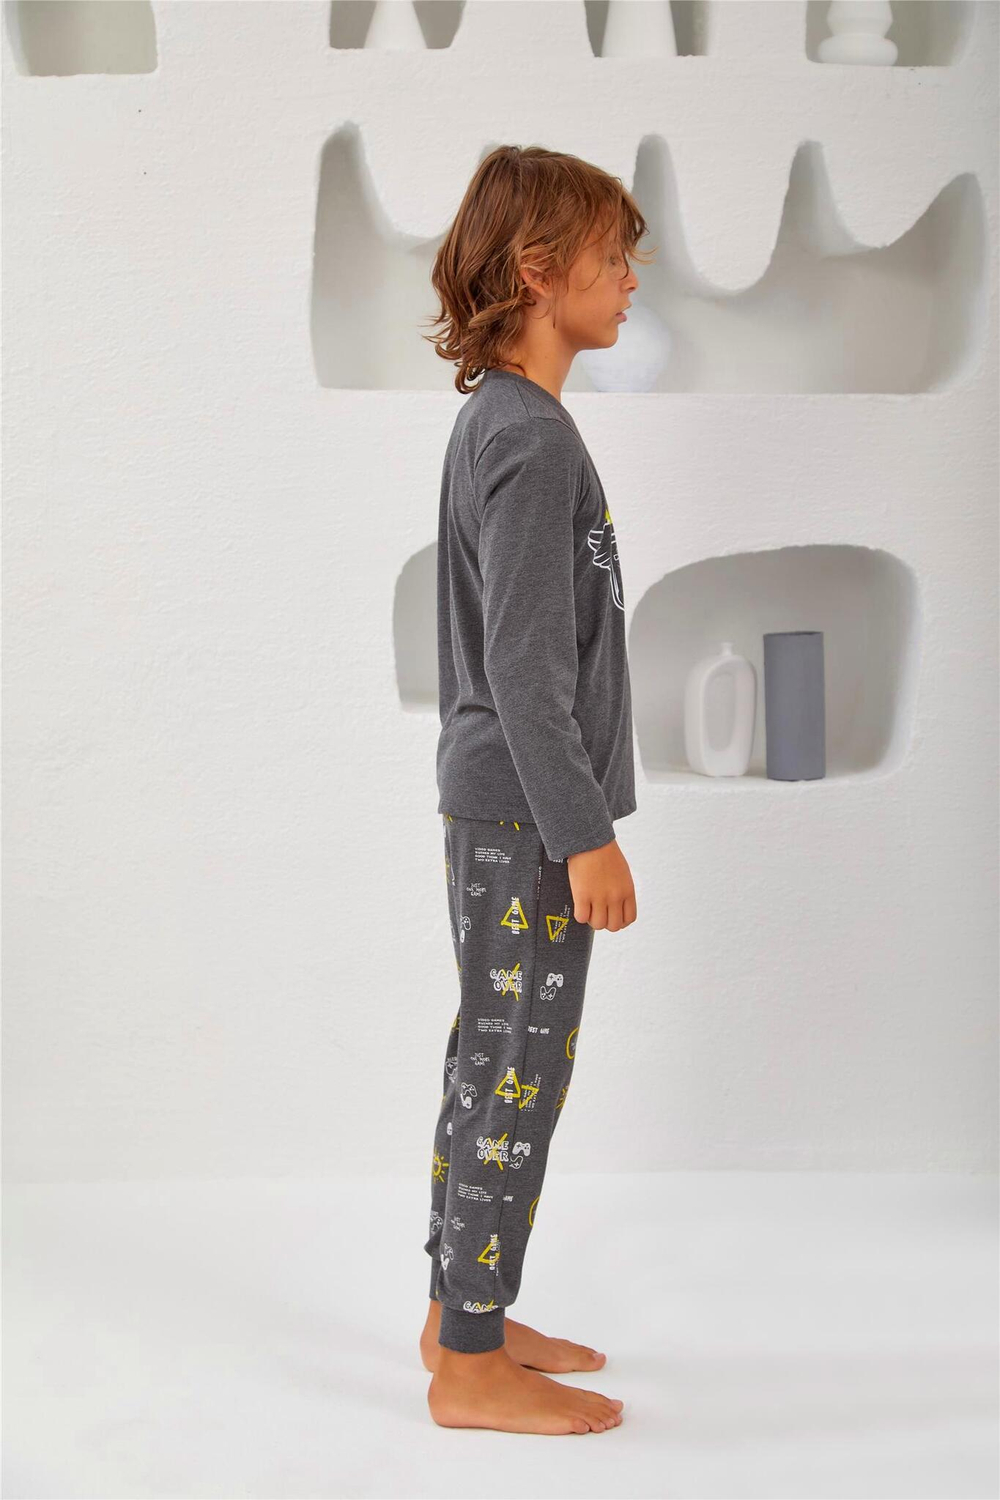 RELAX MODE - пижама с брюками  для мальчика - 10759